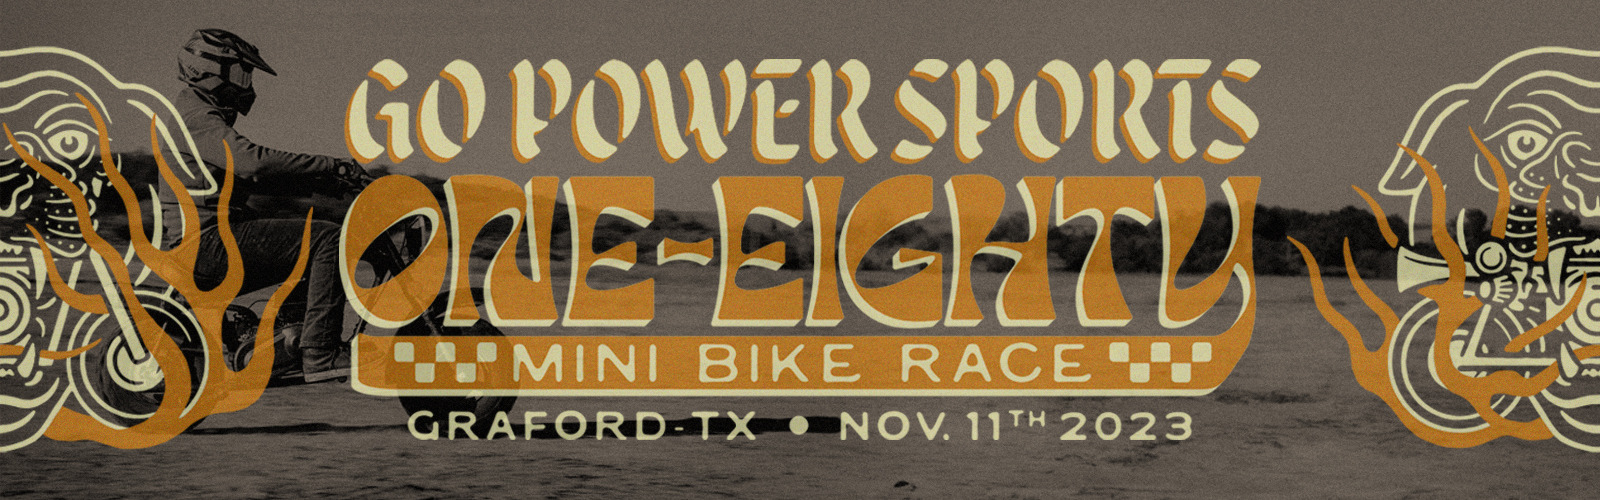 GoPowerSports 180 Minibike Race on November, 11th, 2023